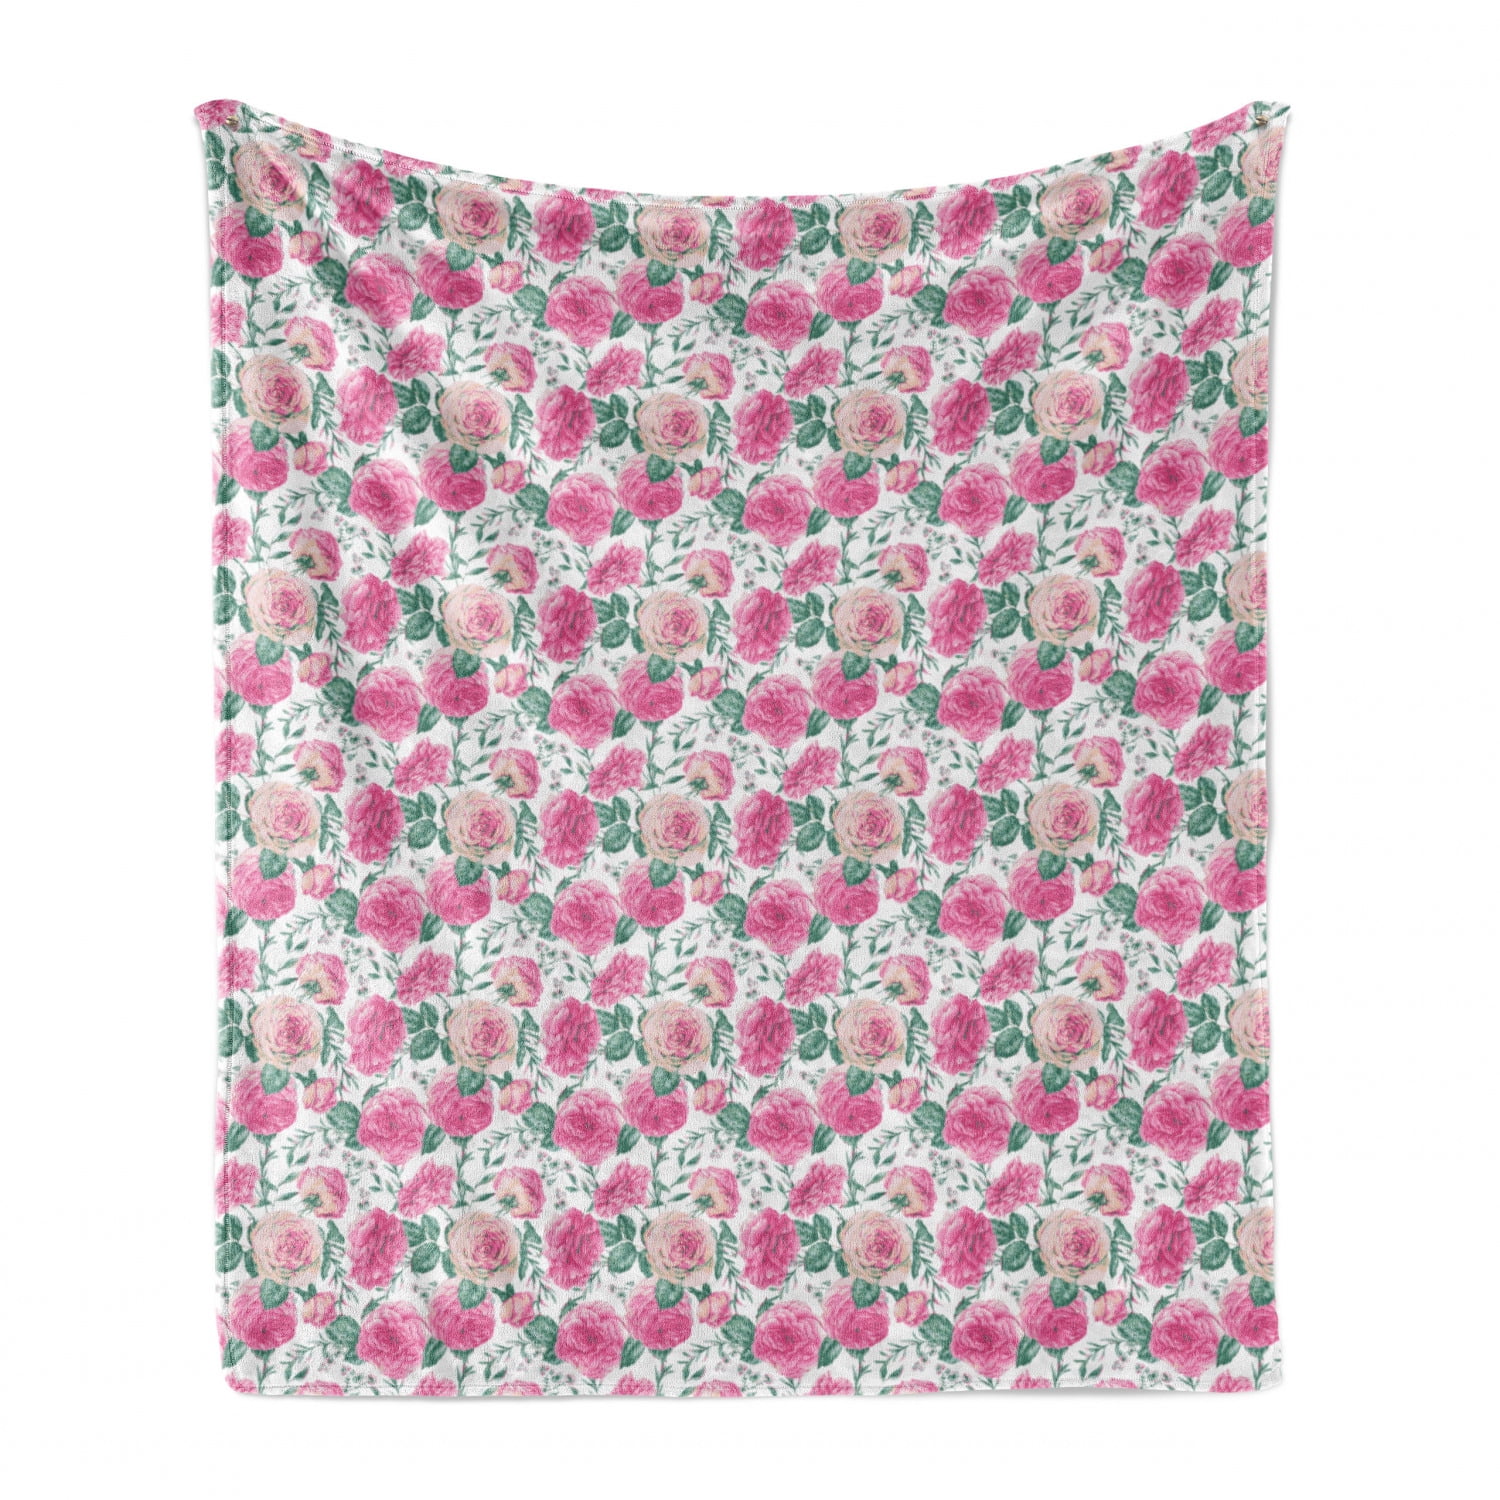 Flannel Throw 60'' X 50'' Rose Flower Fleece Blanket Soft Comfy Pompom Fringe Blanket Throws for Outdoor and Indoor 